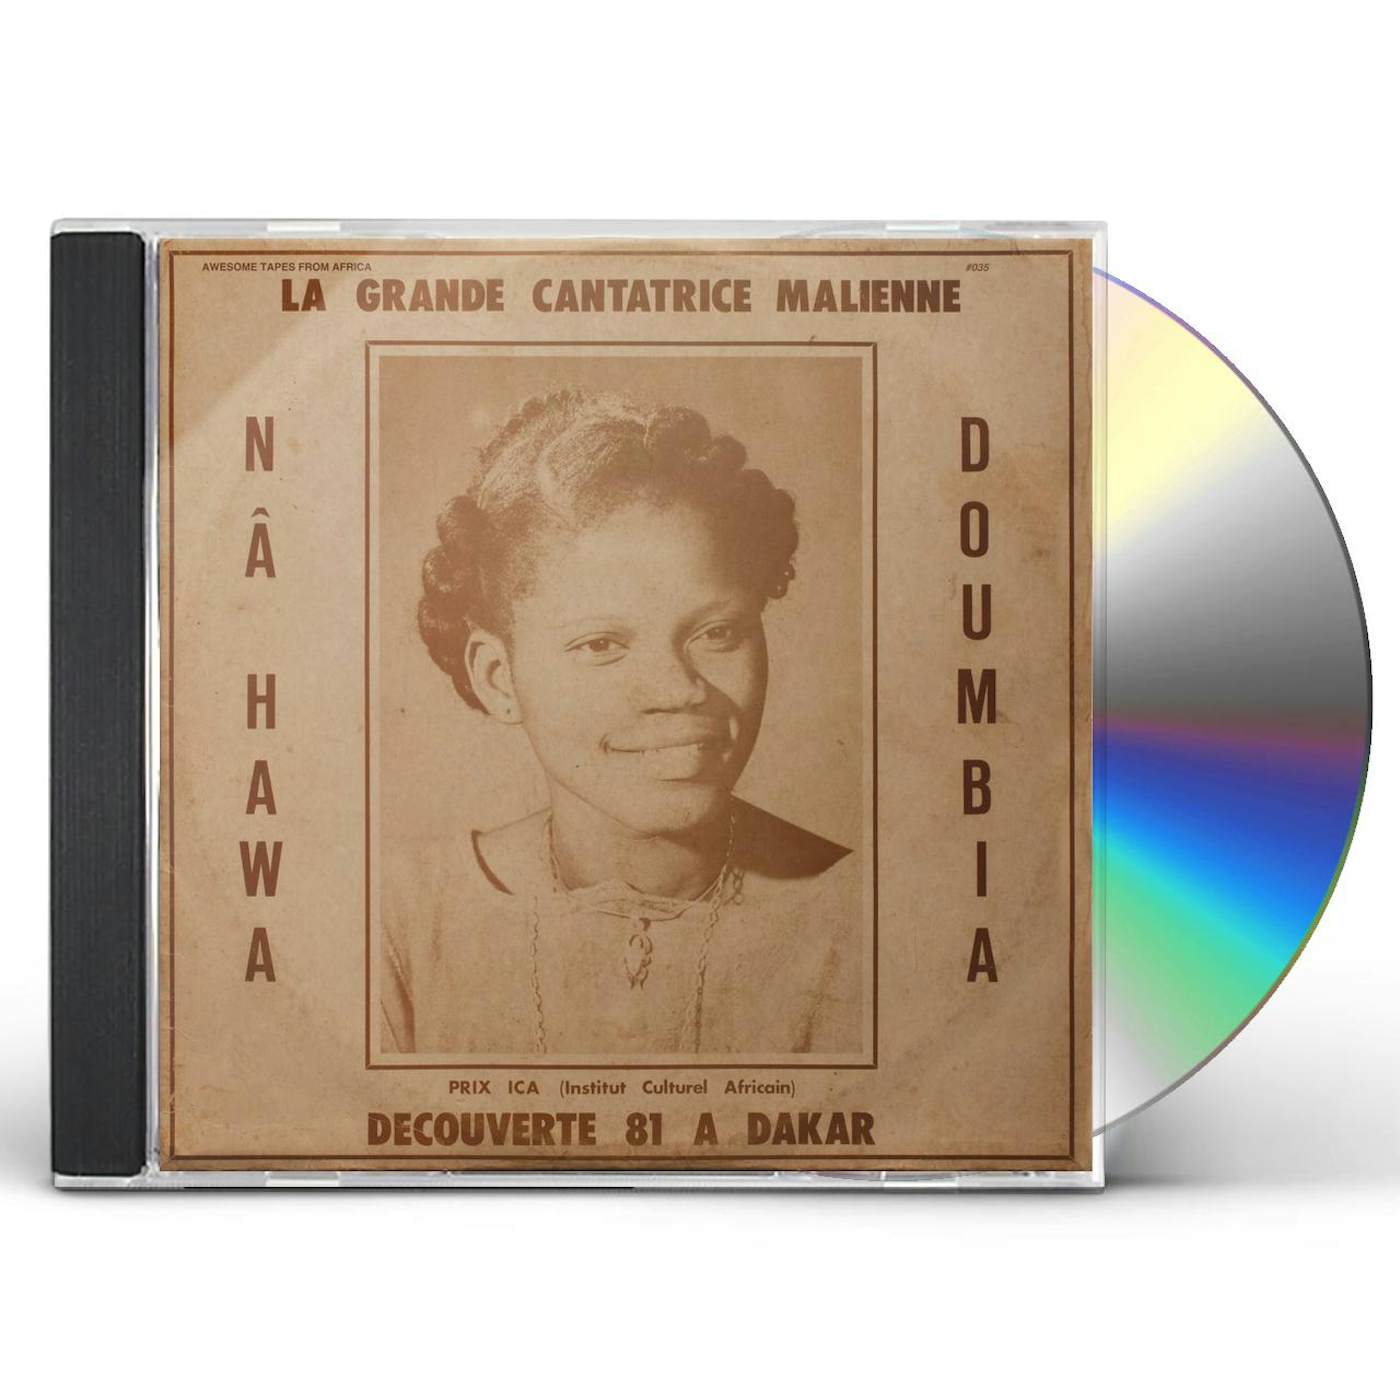 Nahawa Doumbia LA GRANDE CANTATRICE MALIENNE, VOL. 1 CD